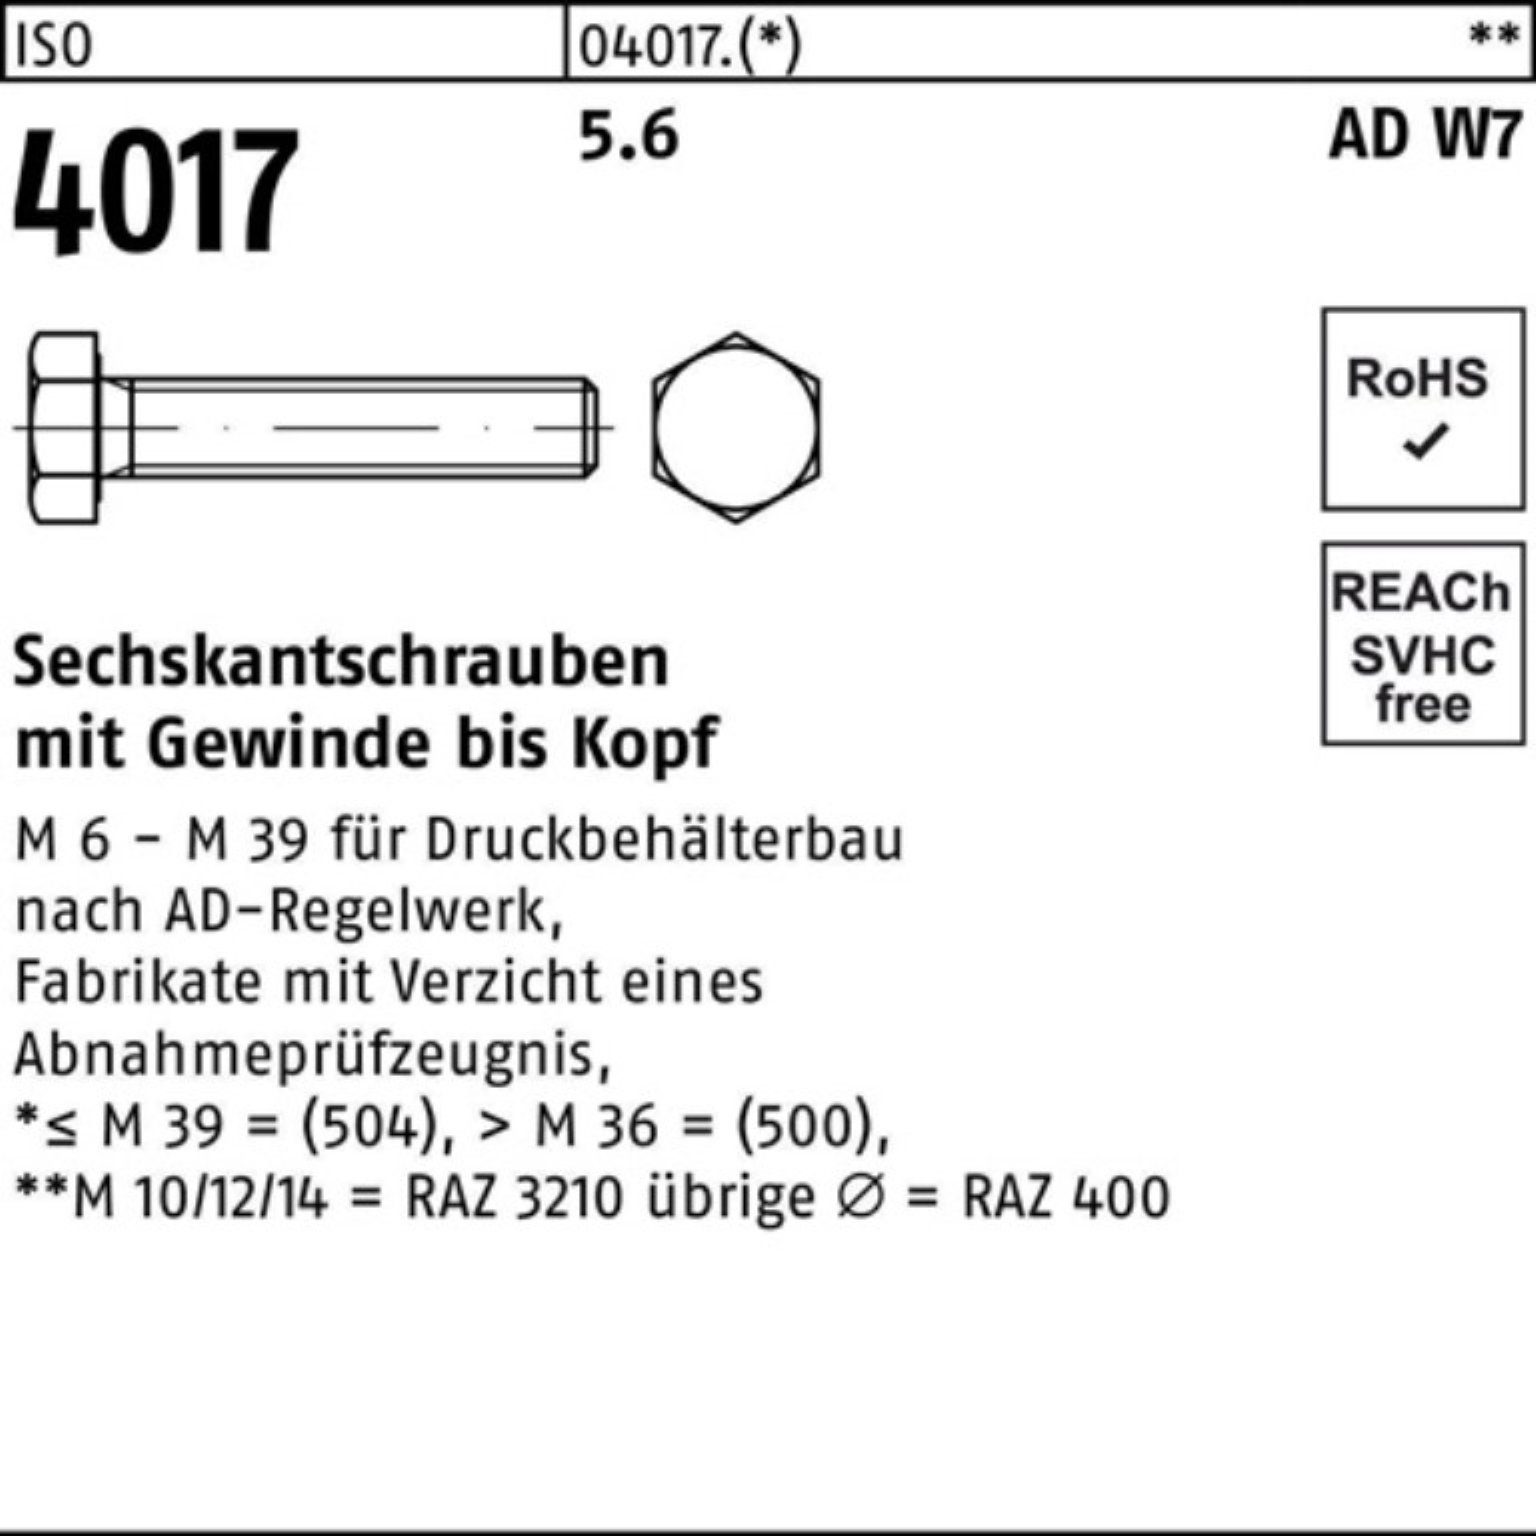 Bufab Sechskantschraube 100er Pack Sechskantschraube W7 200 I Stück 4017 ISO 1 5.6 M24x AD VG